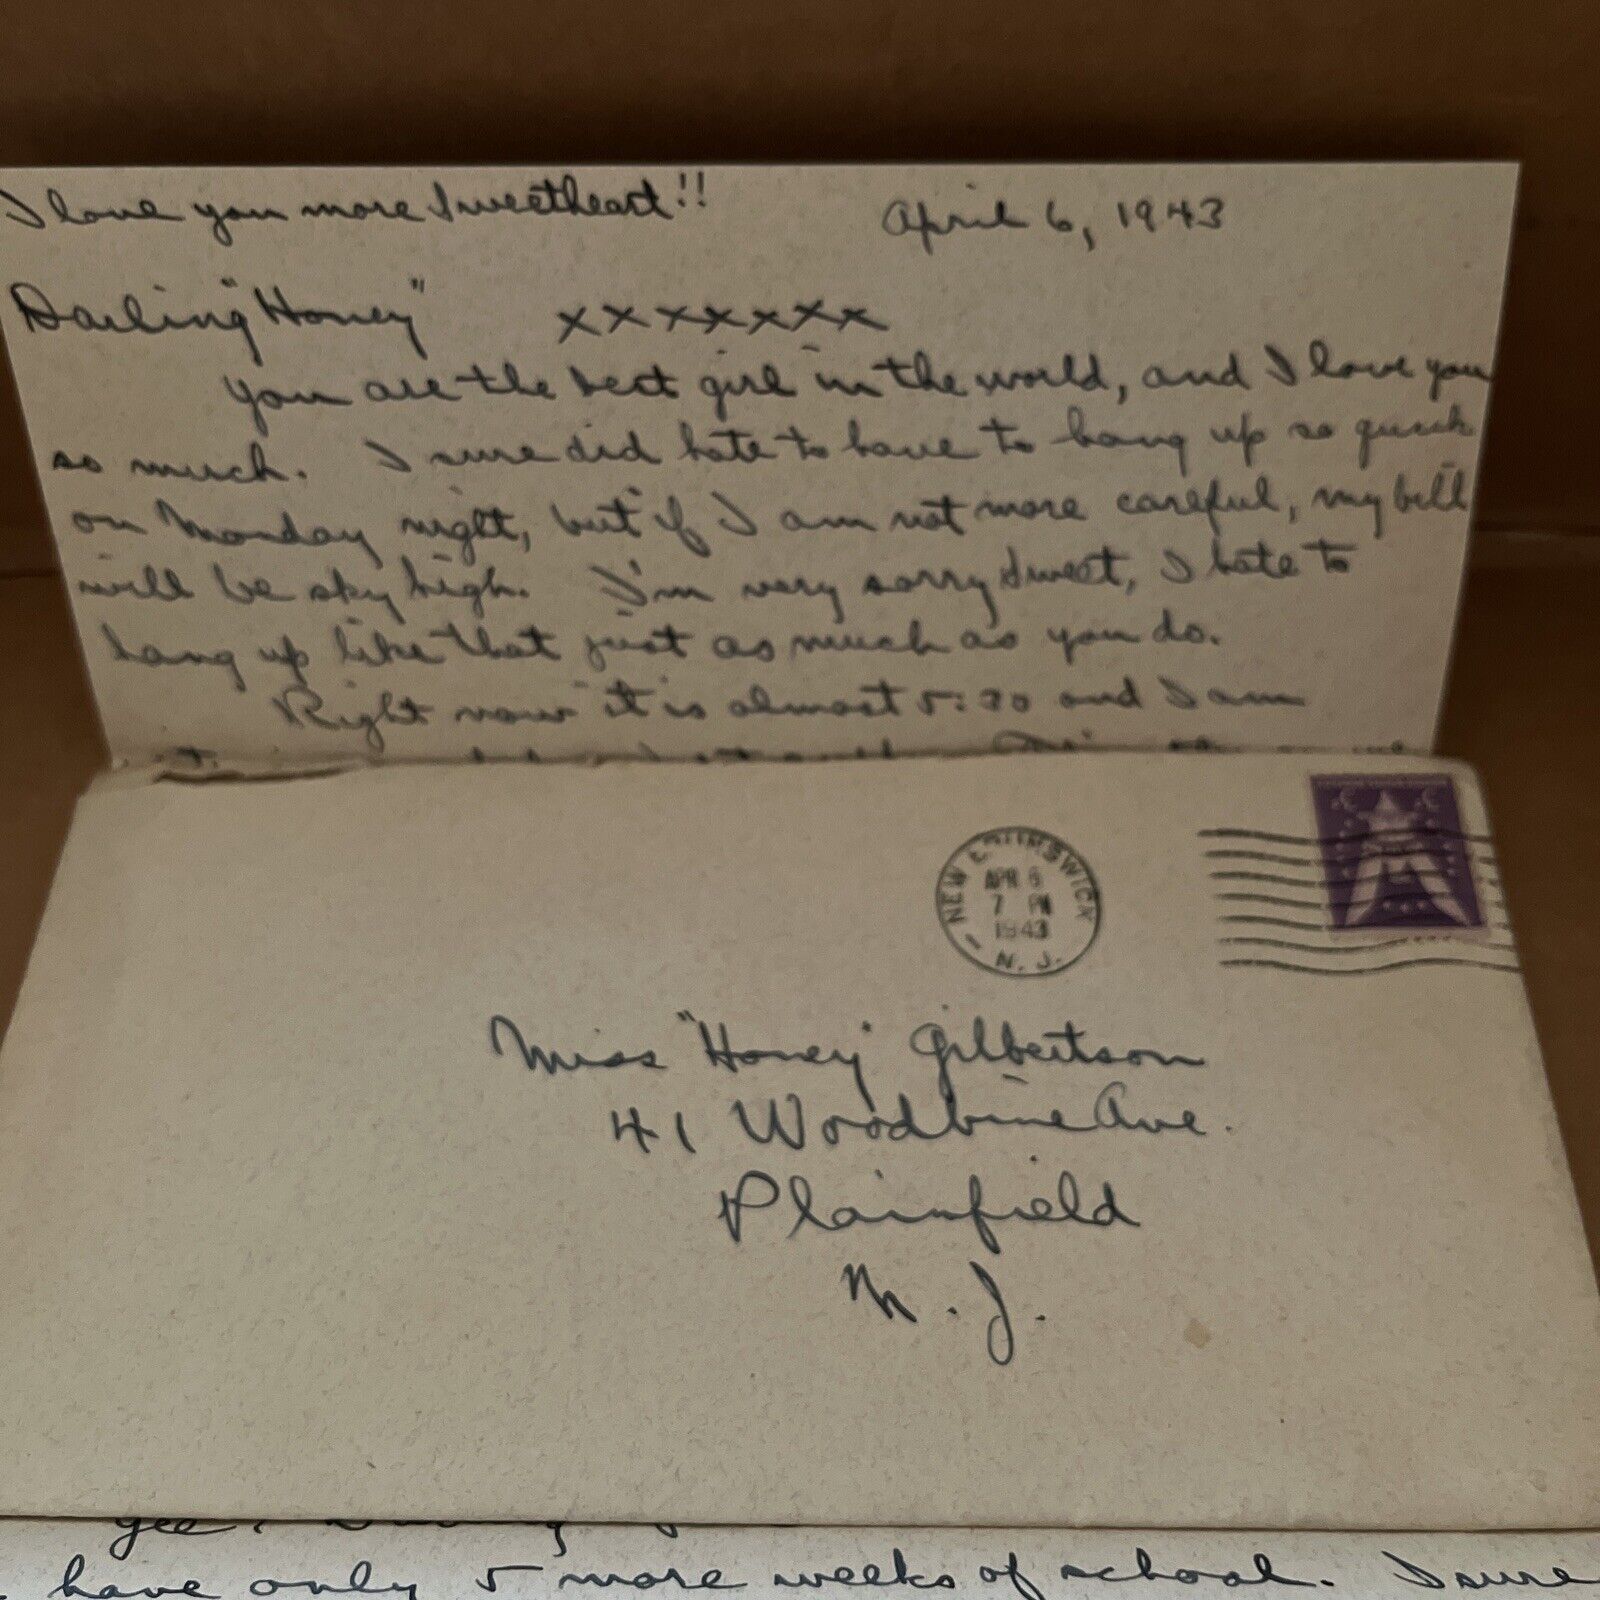 1943 Love Letter Correspondence from Rutgers University on Hitler WWII Bombings